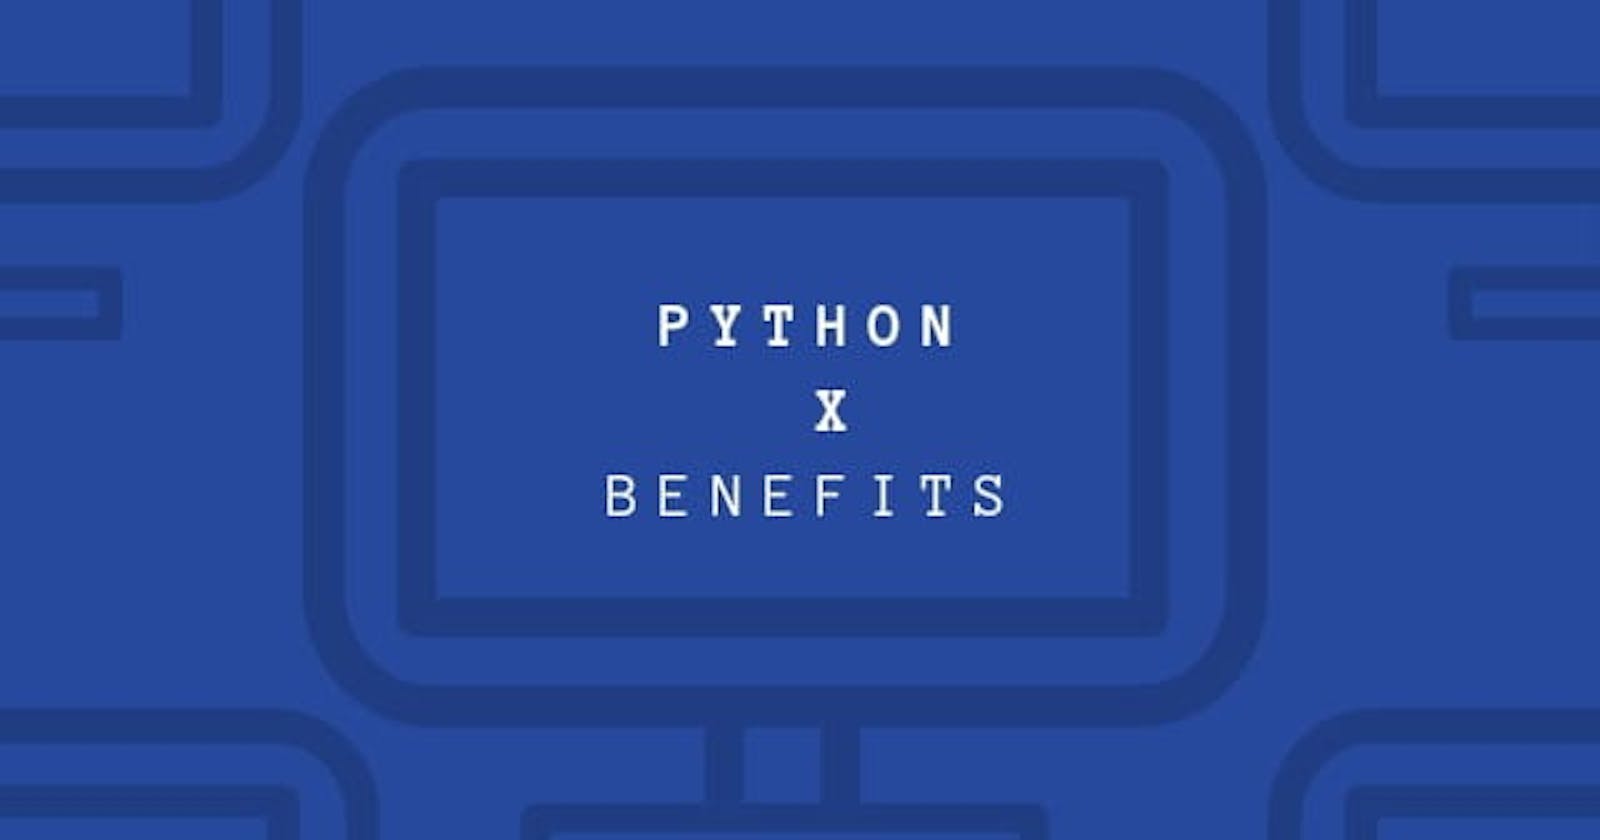 Introducing Python x Benefits.